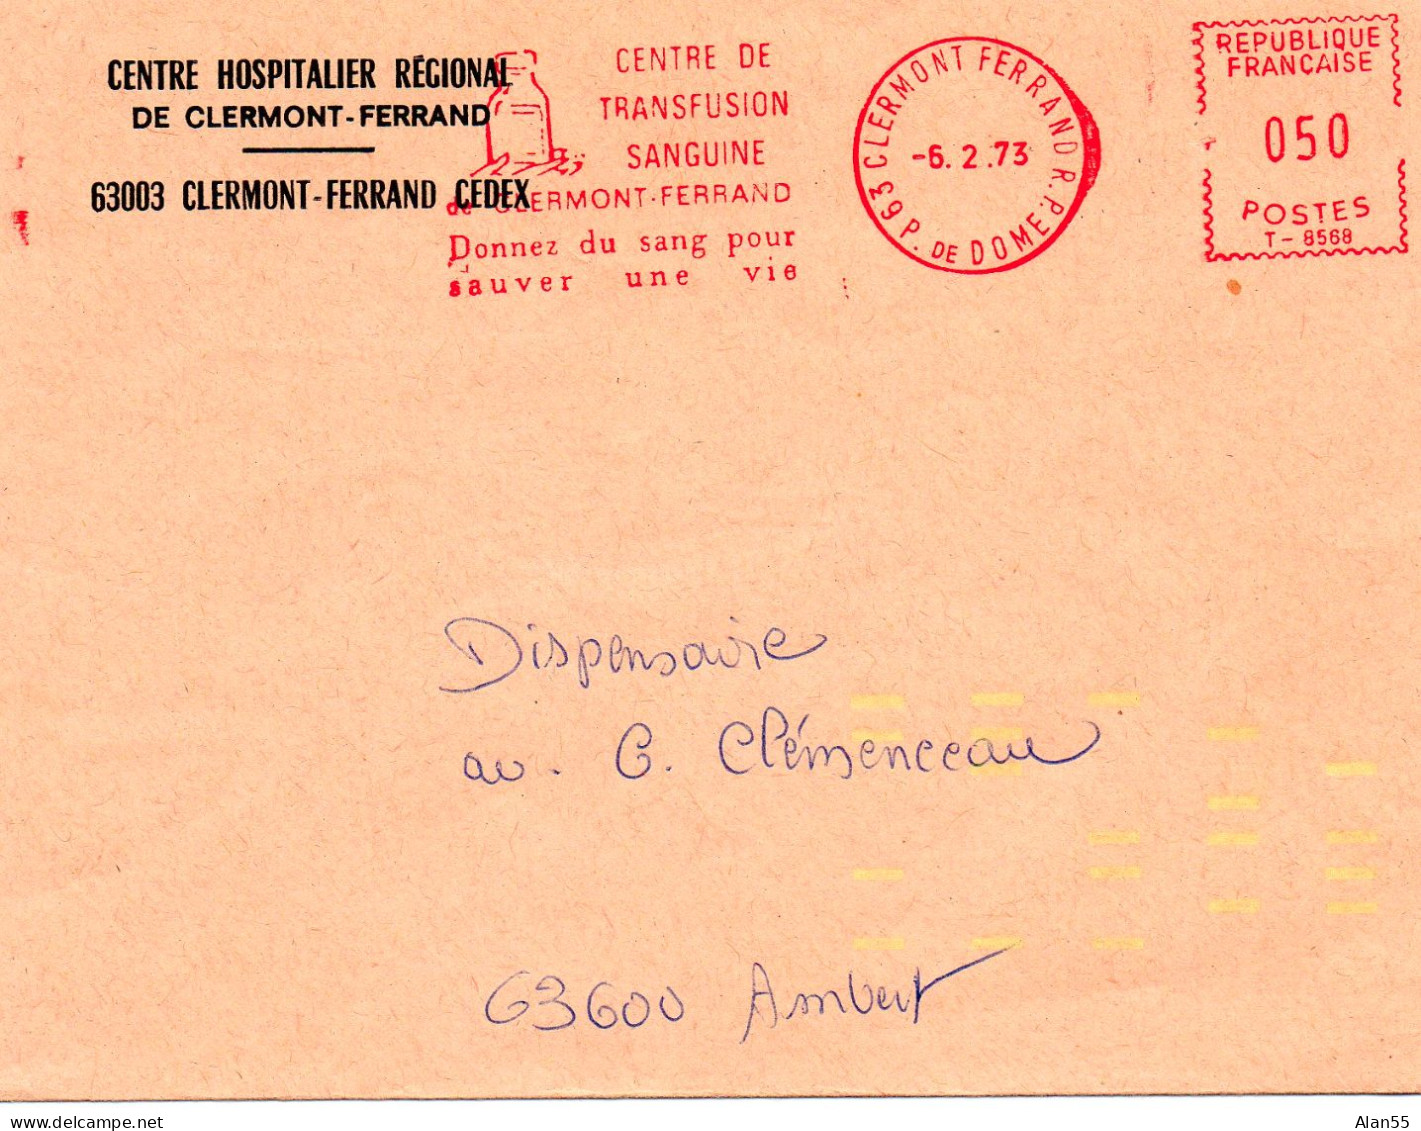 FRANCE.1956. " TRANSFUSION SANGUINE". MARQUE JAUNE INDEXATION COURRIER. - Primeros Auxilios